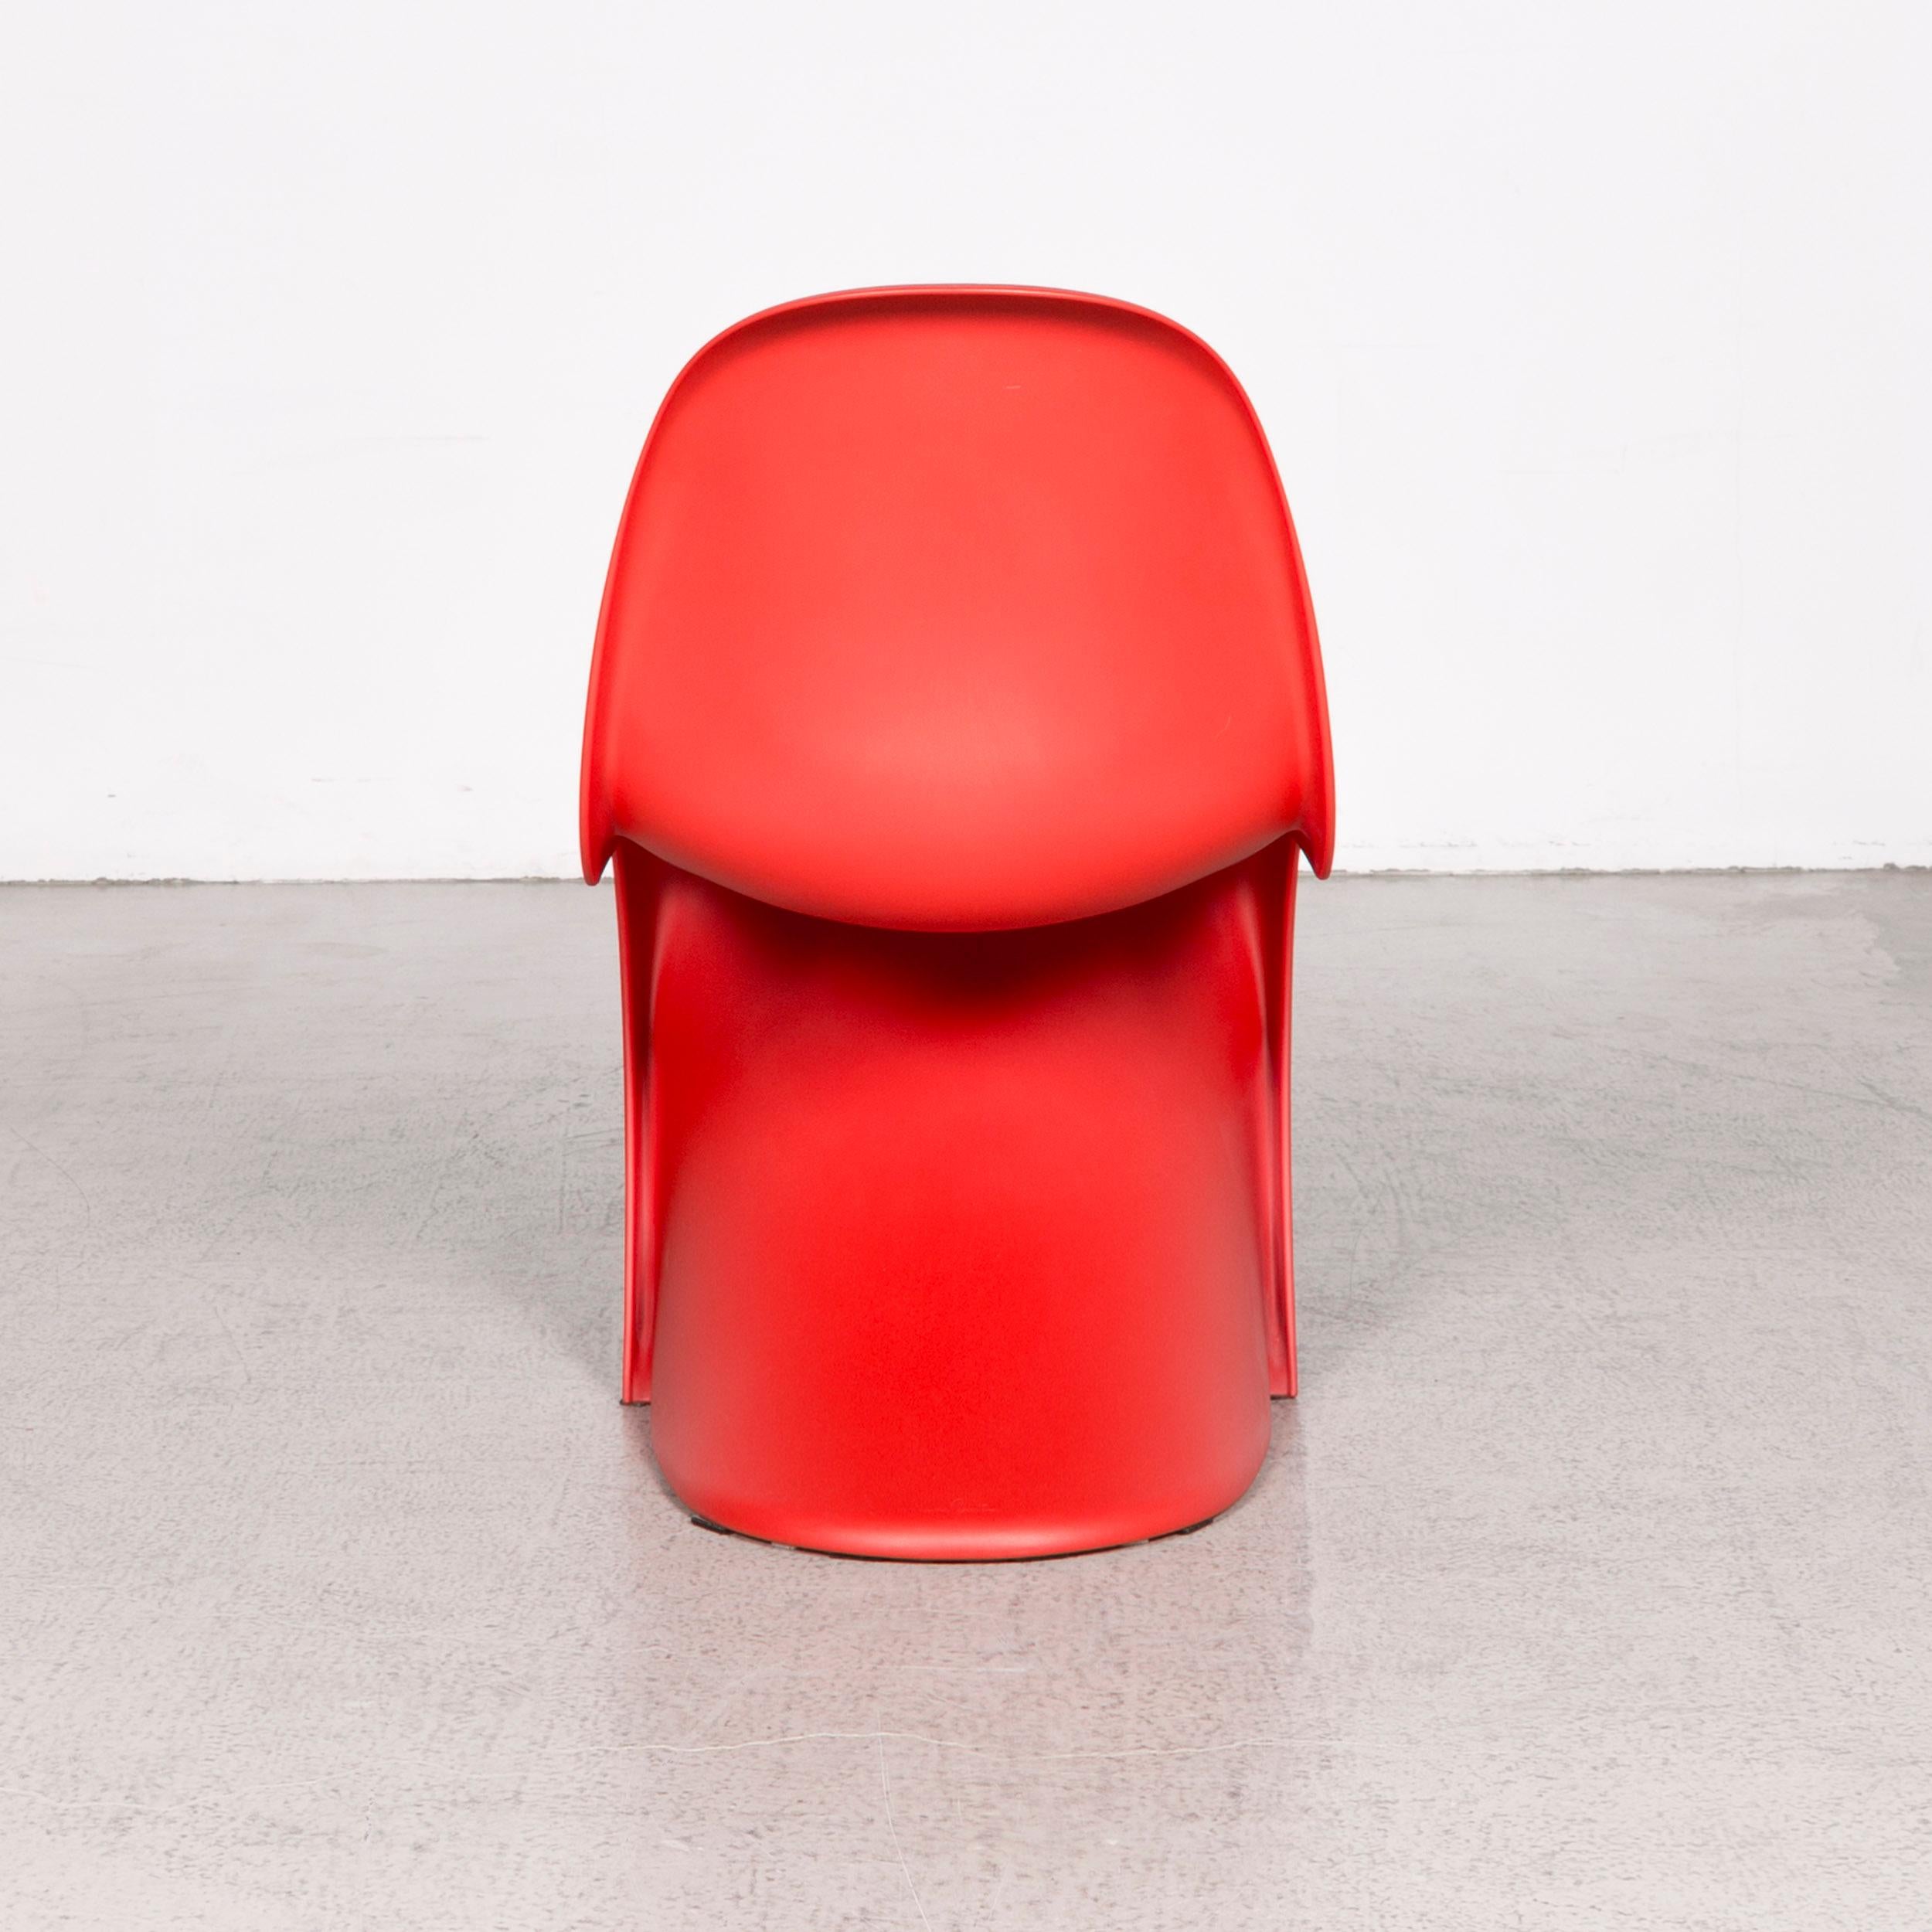 Vitra Panton Chair Designer Plastic Armchair Red by Verner Panton Polyproypylen For Sale 2